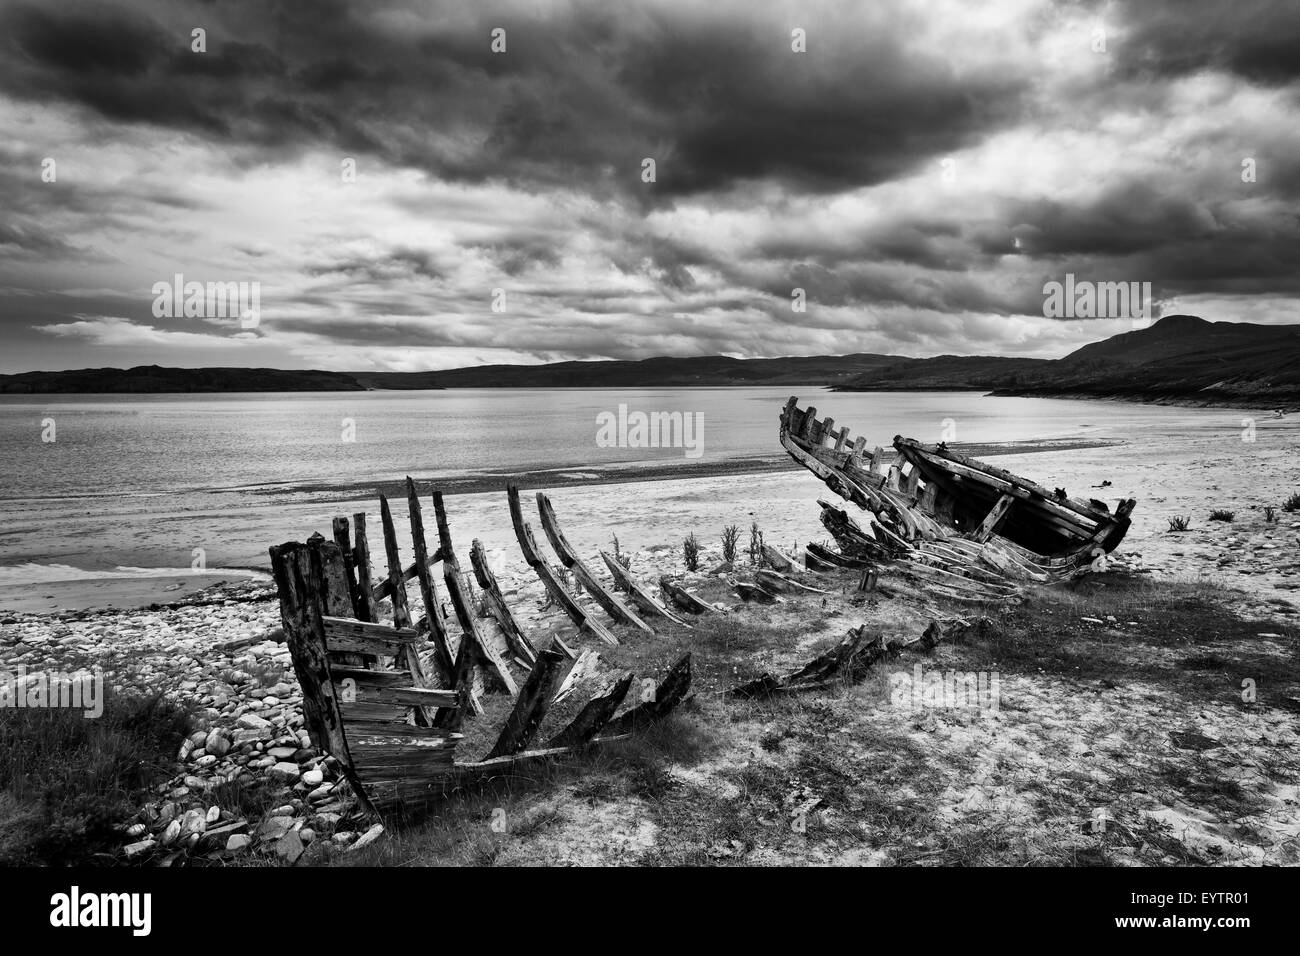 Talmine Bay, Boot, Schiff, Wrack, Holz, Fjord, Meer, Strand, Küste, Schottland, s/w Stockfoto